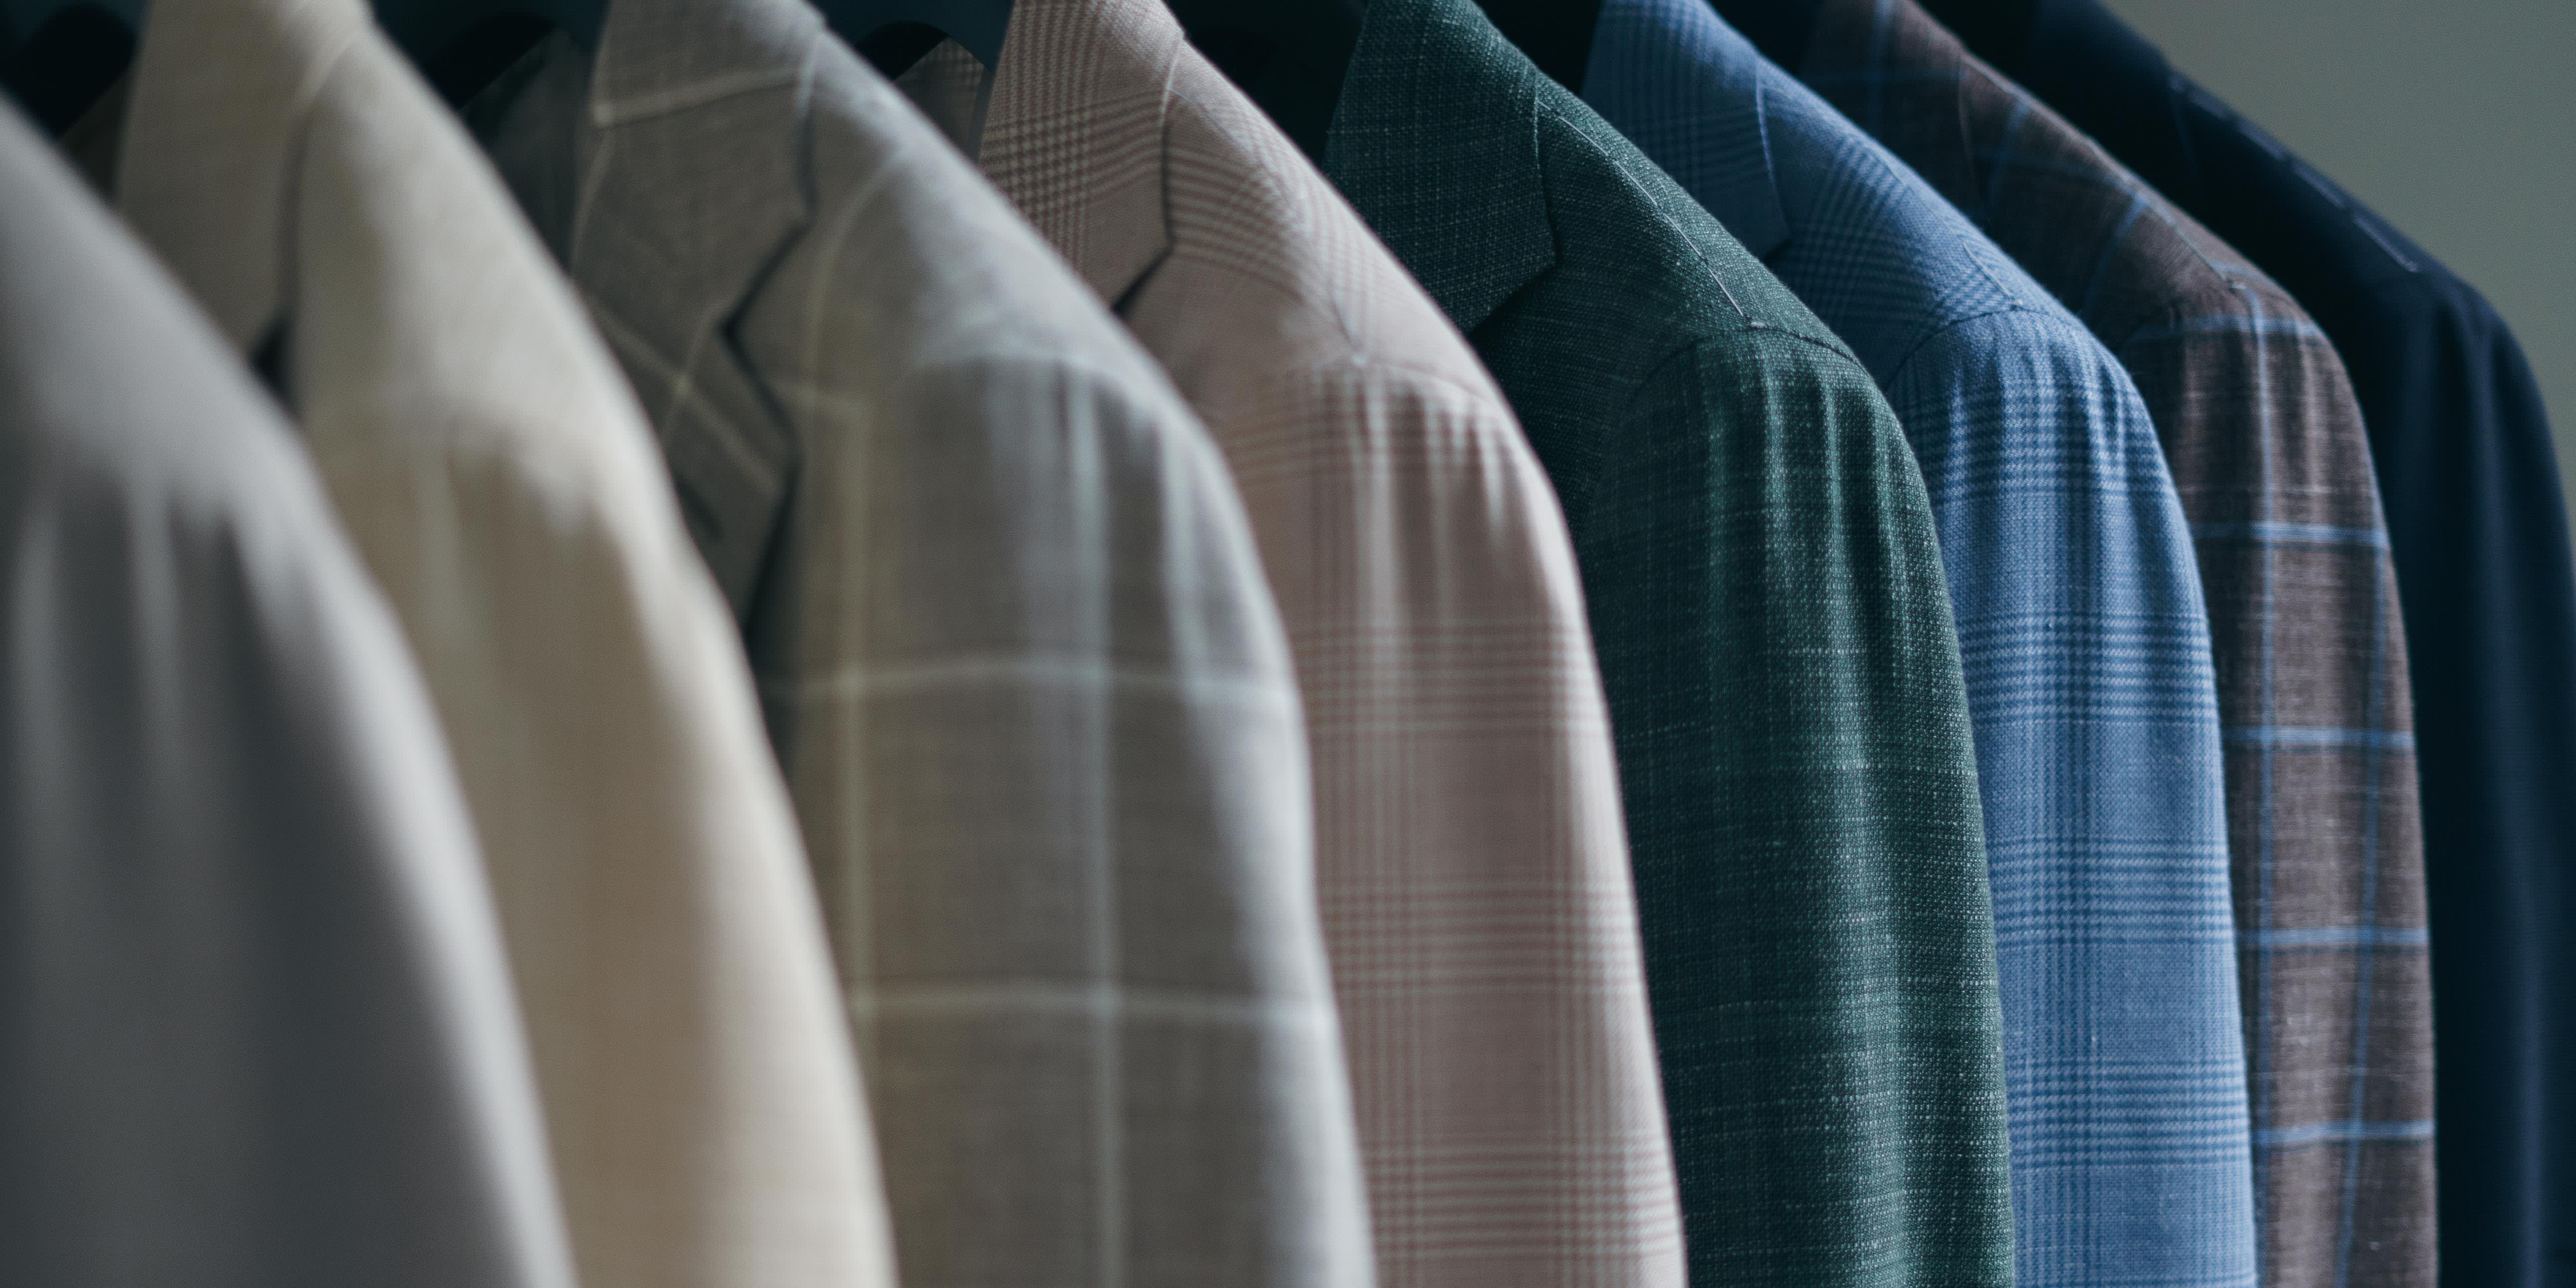 Silk, Cashmere and Linen-Blend Suit Jacket